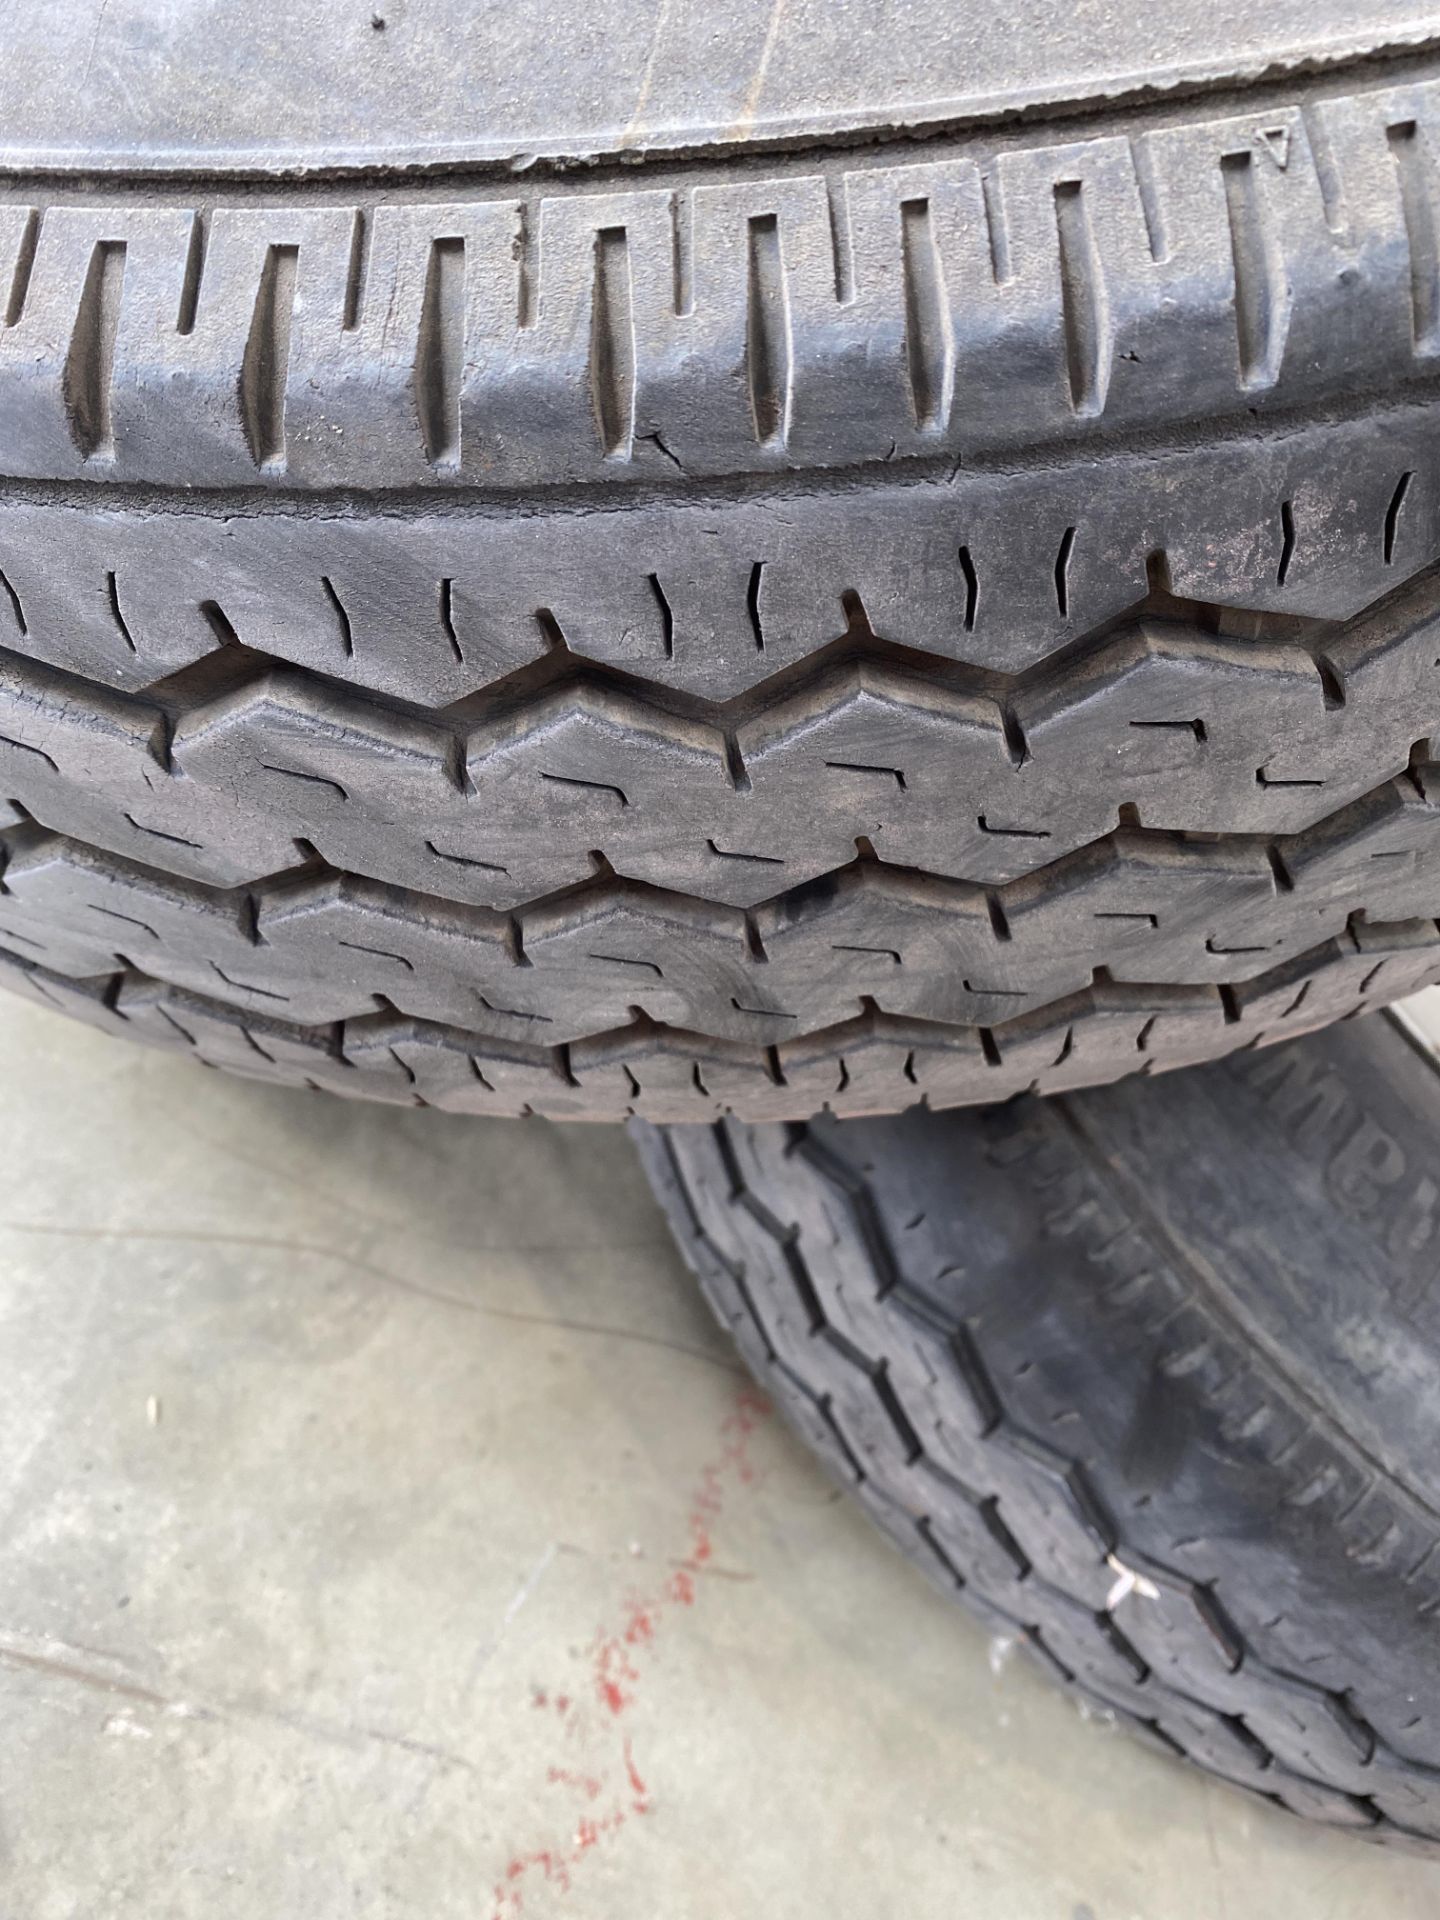 Mohawk 195/R14/C Steel 5 stud wheels / rims & tyres - Image 4 of 5